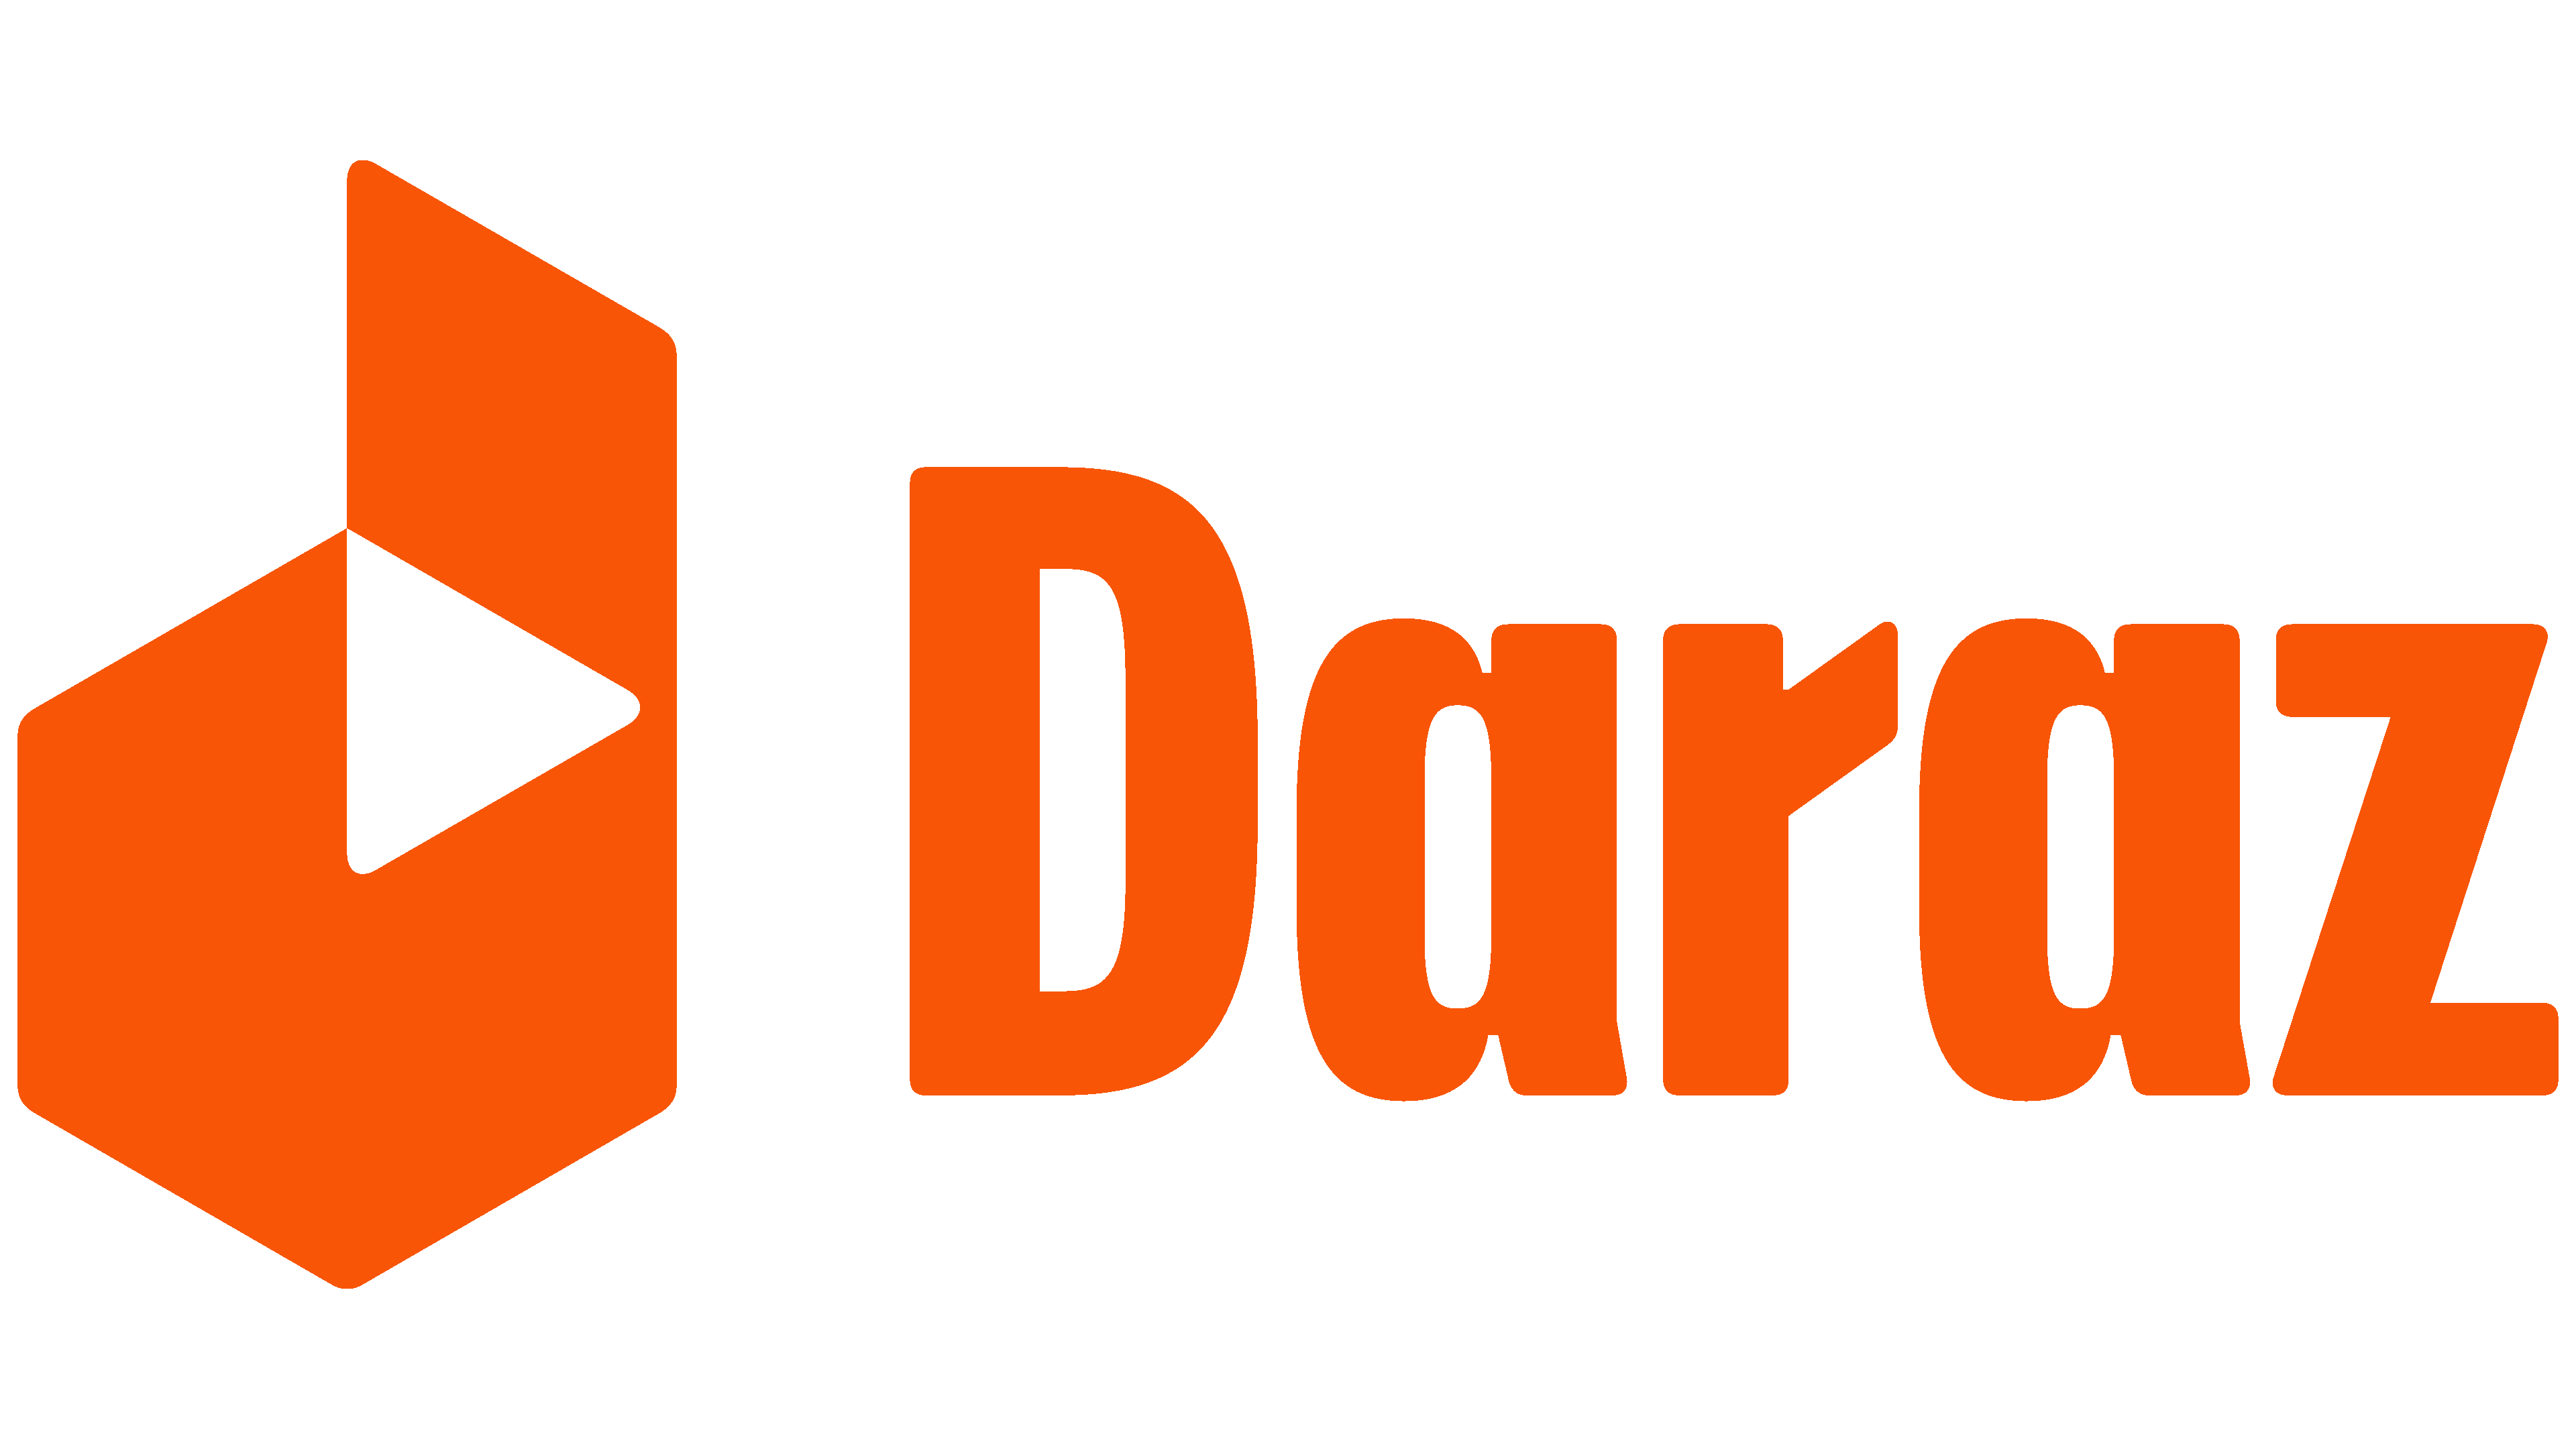 Daraz-Logo